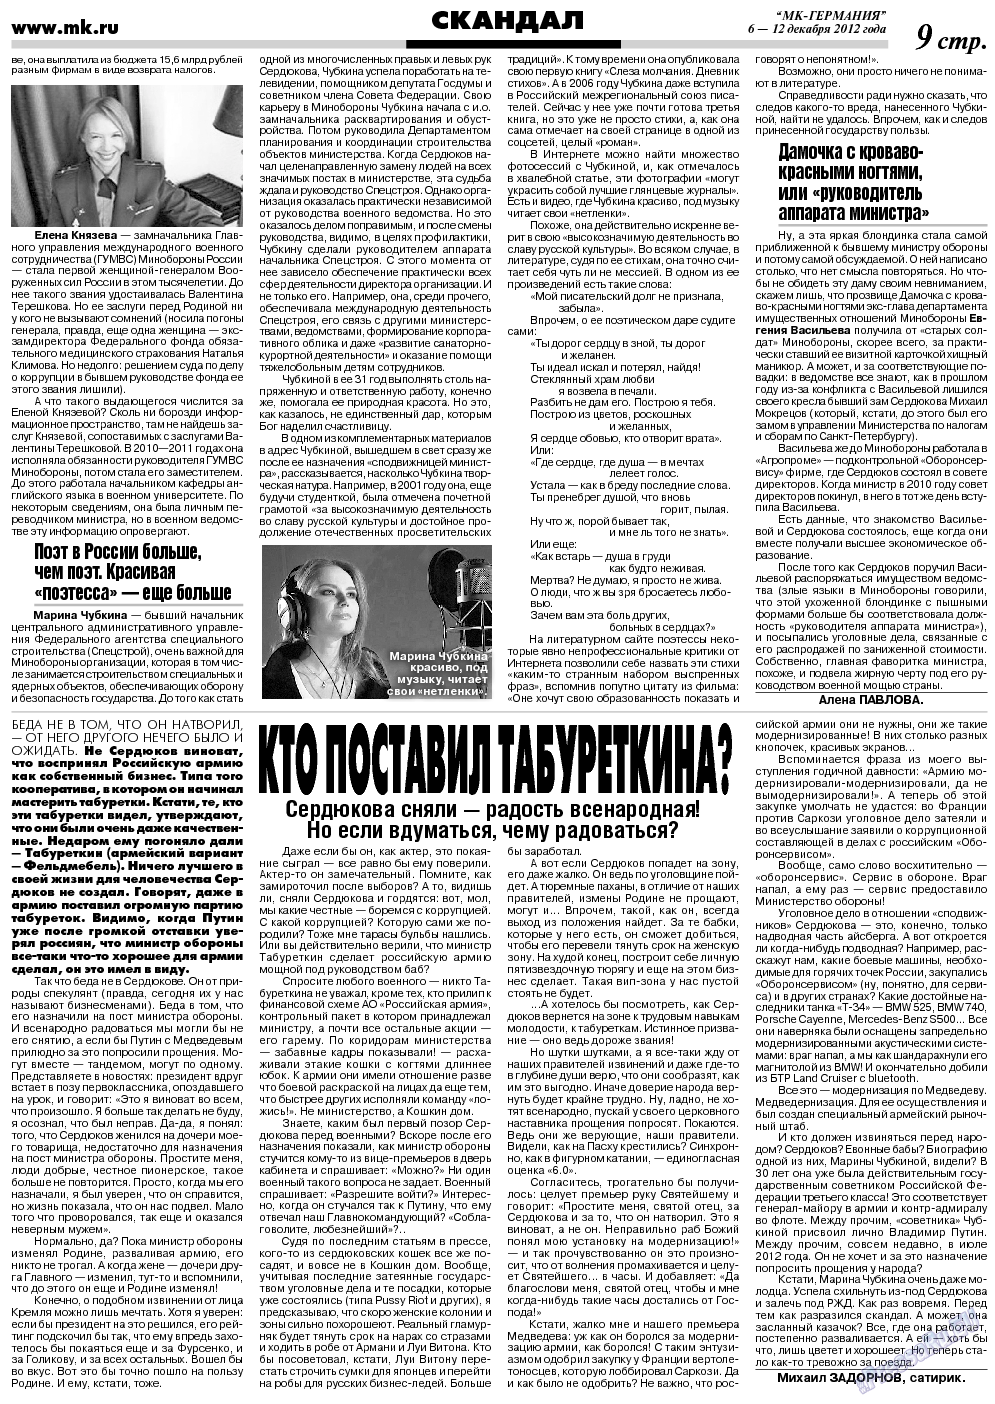 МК-Германия, газета. 2012 №49 стр.9